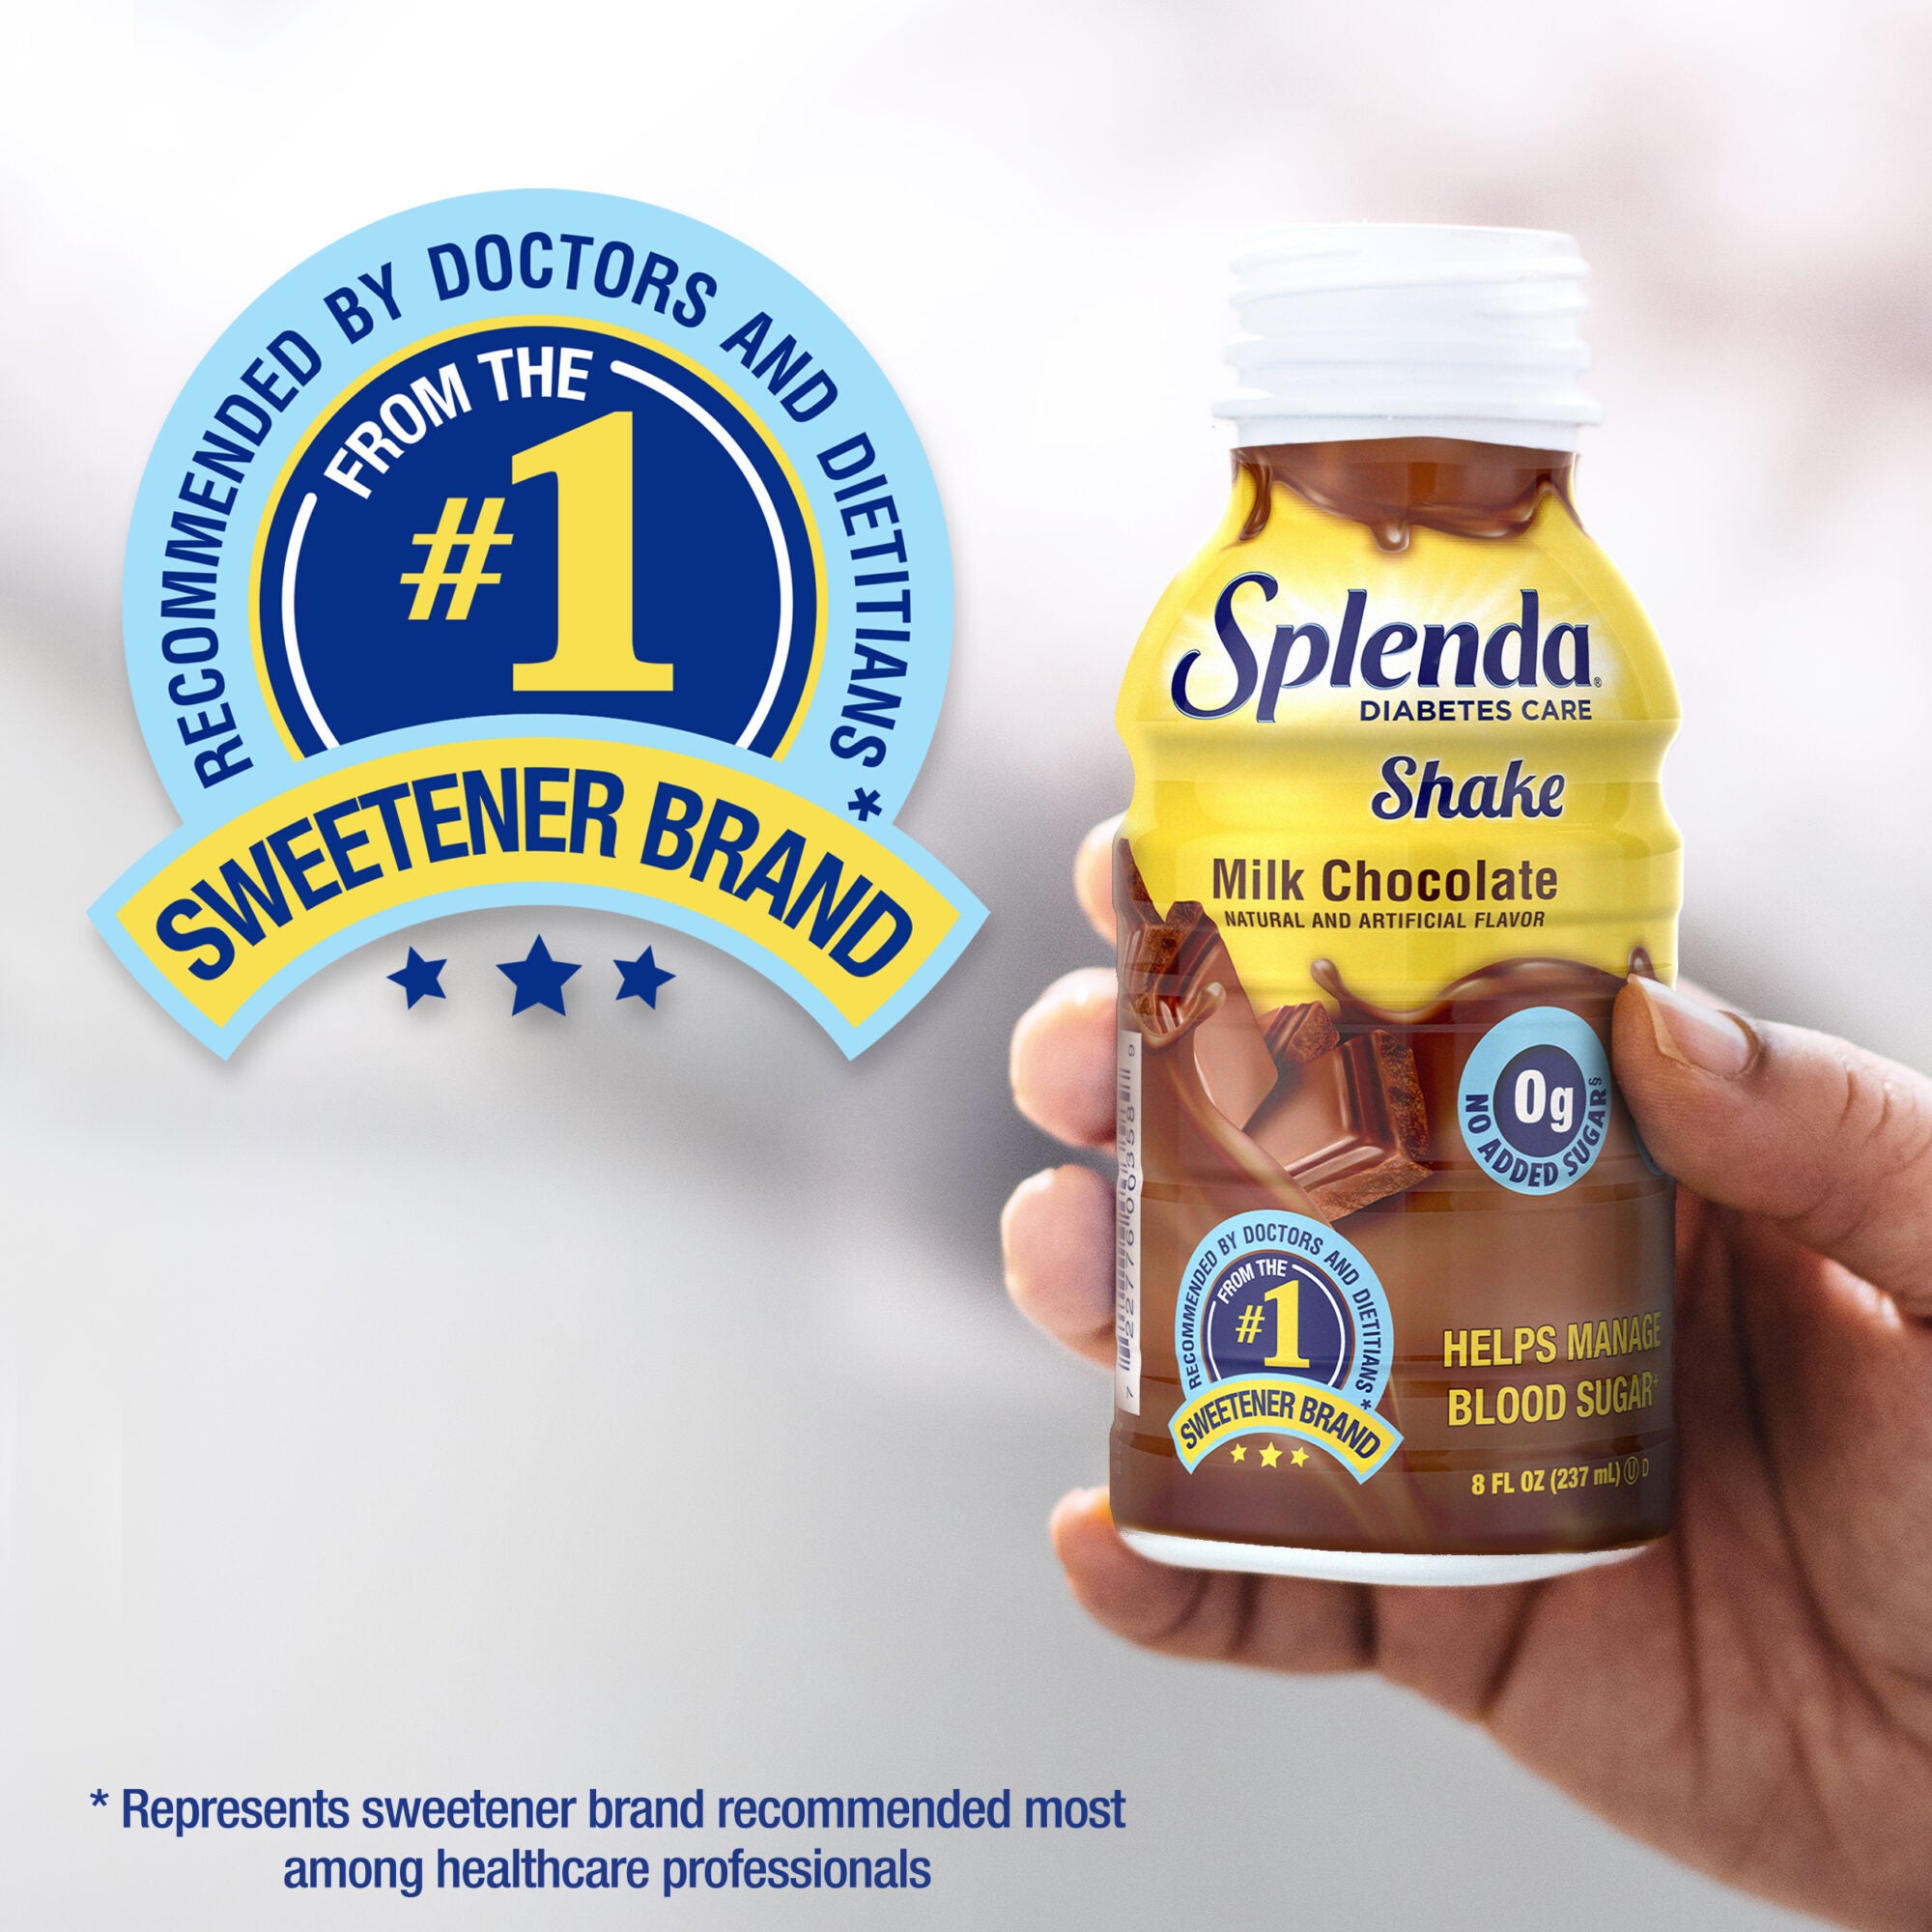 Splenda®牛奶巧克力糖尿病护理奶昔-来自#1甜味剂品牌